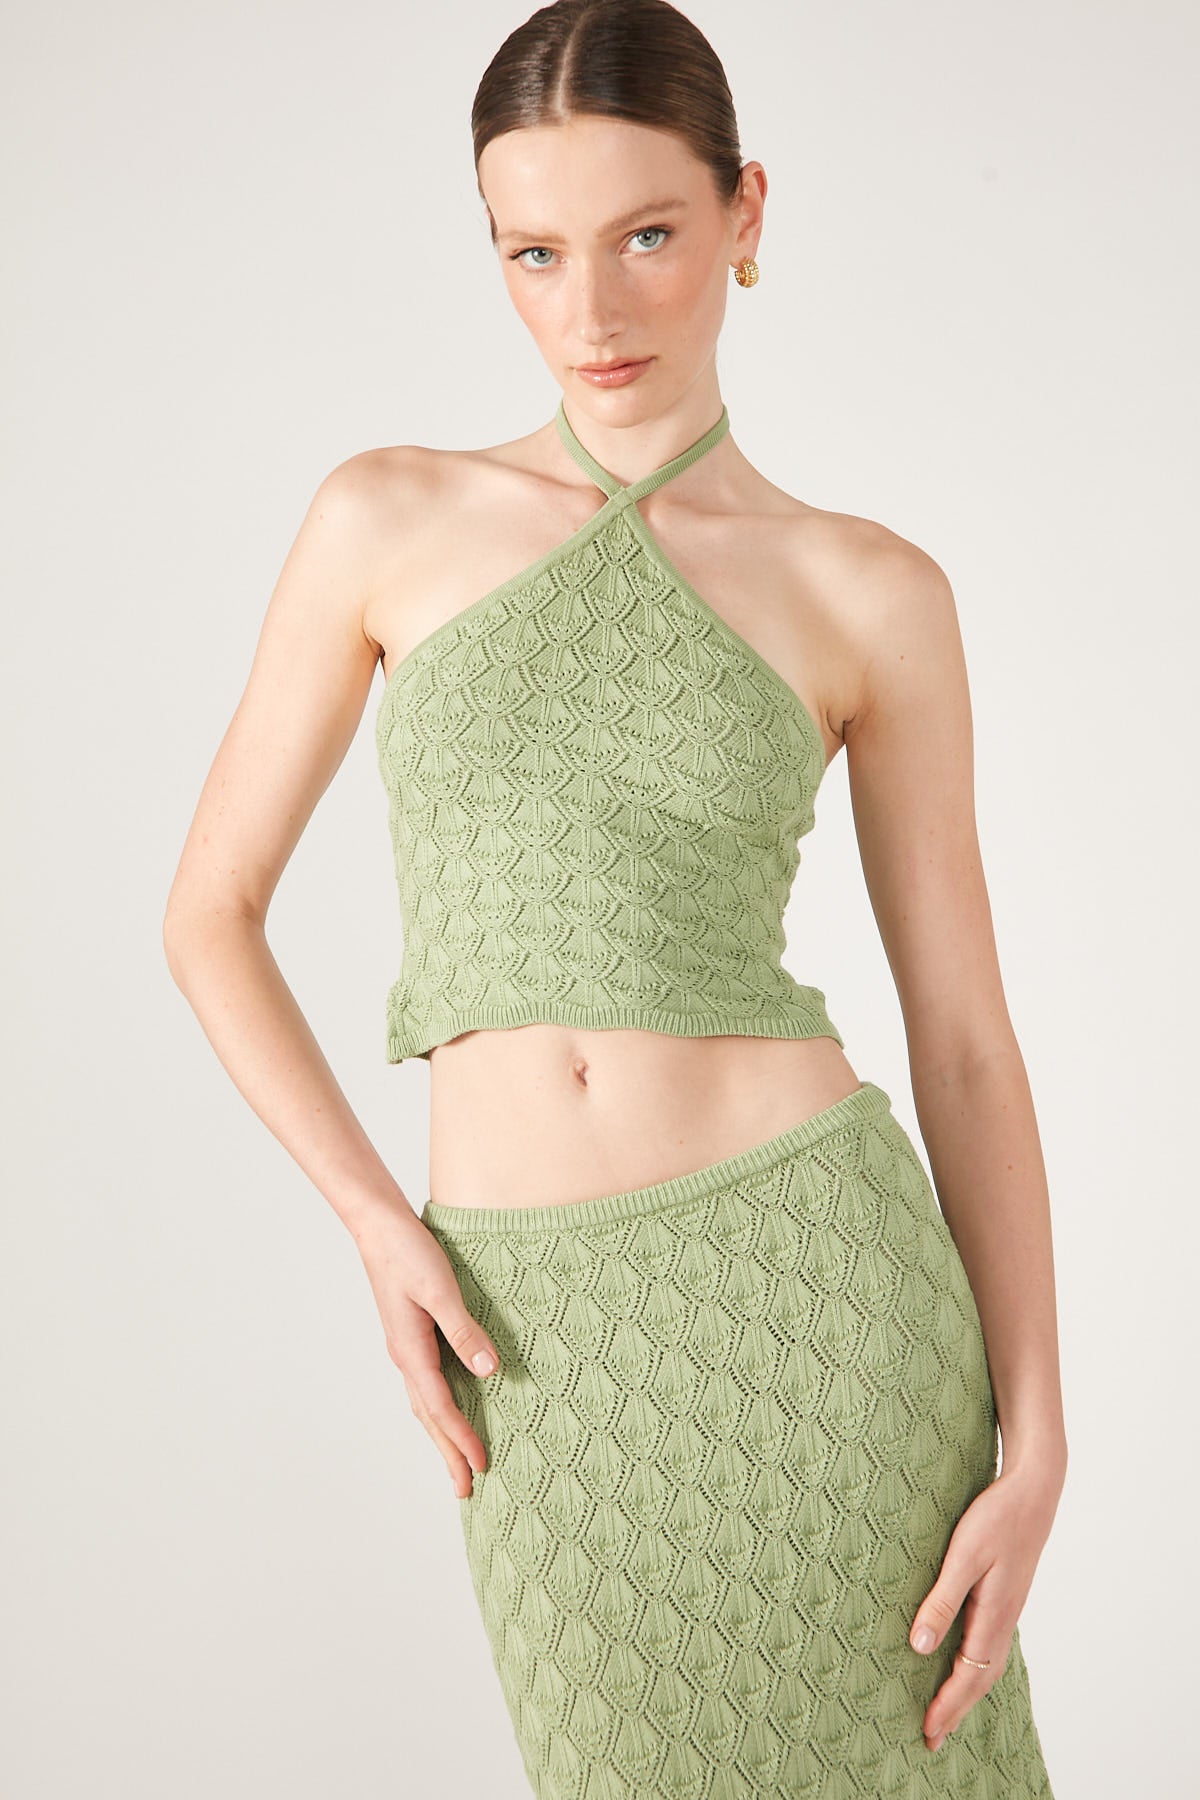 Perfect Stranger Dominique Elissa Golden Hour Crochet Knit Halter Top Green